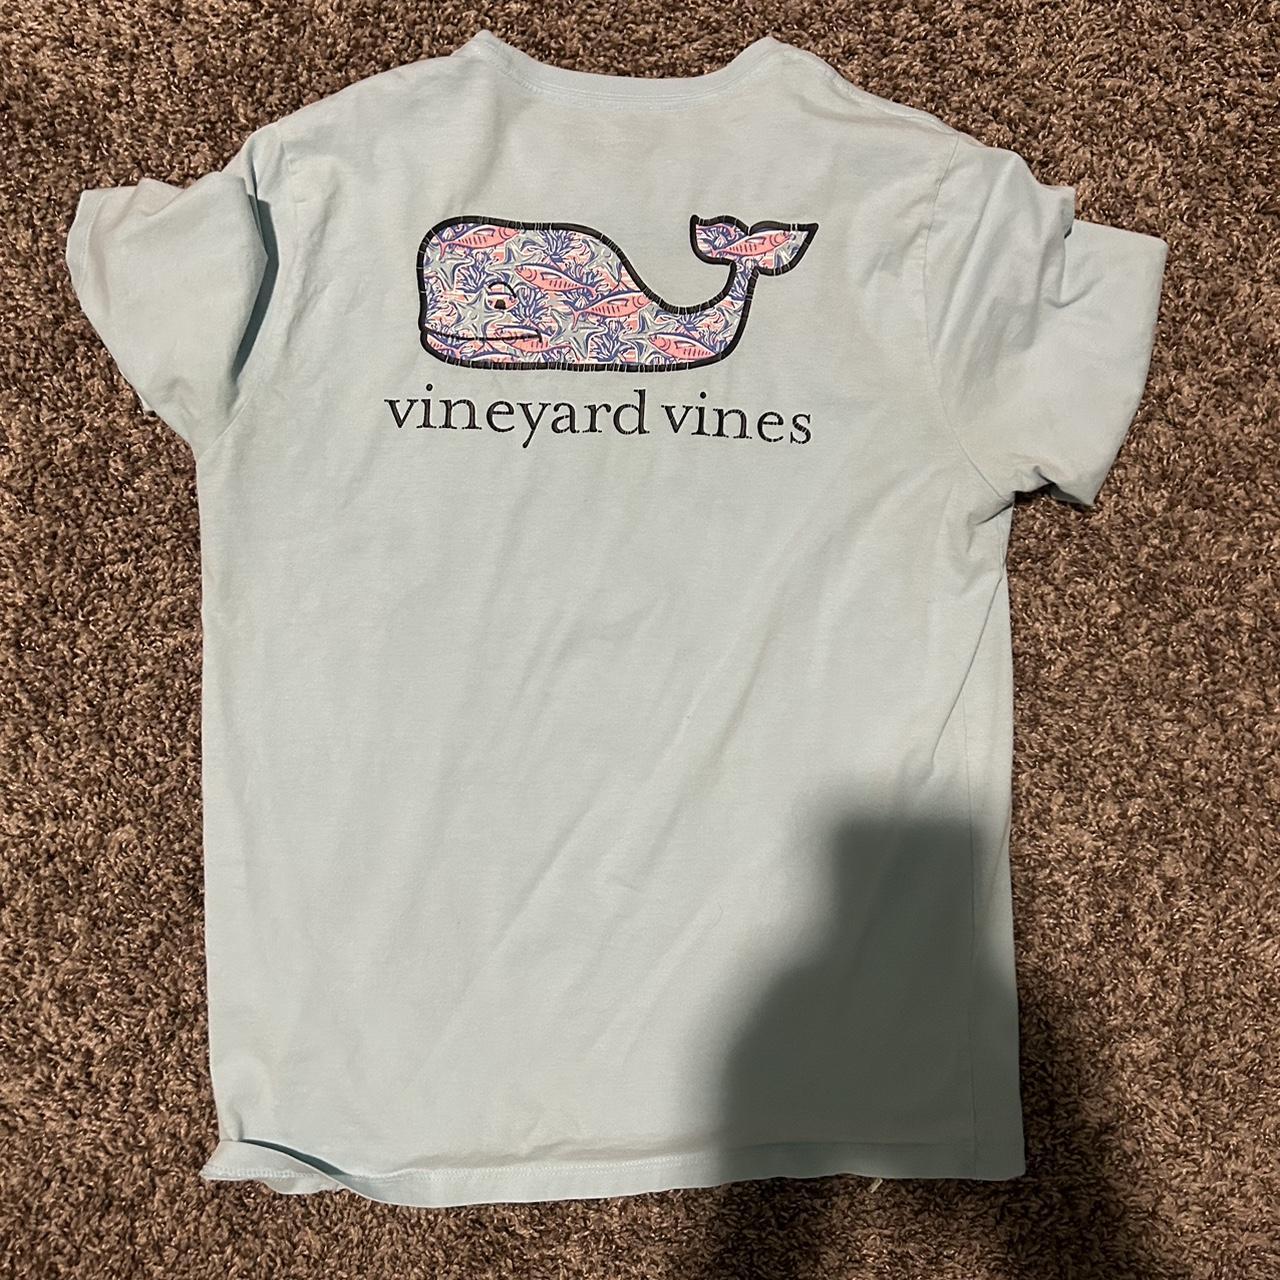 Vineyard vine shirt - Depop